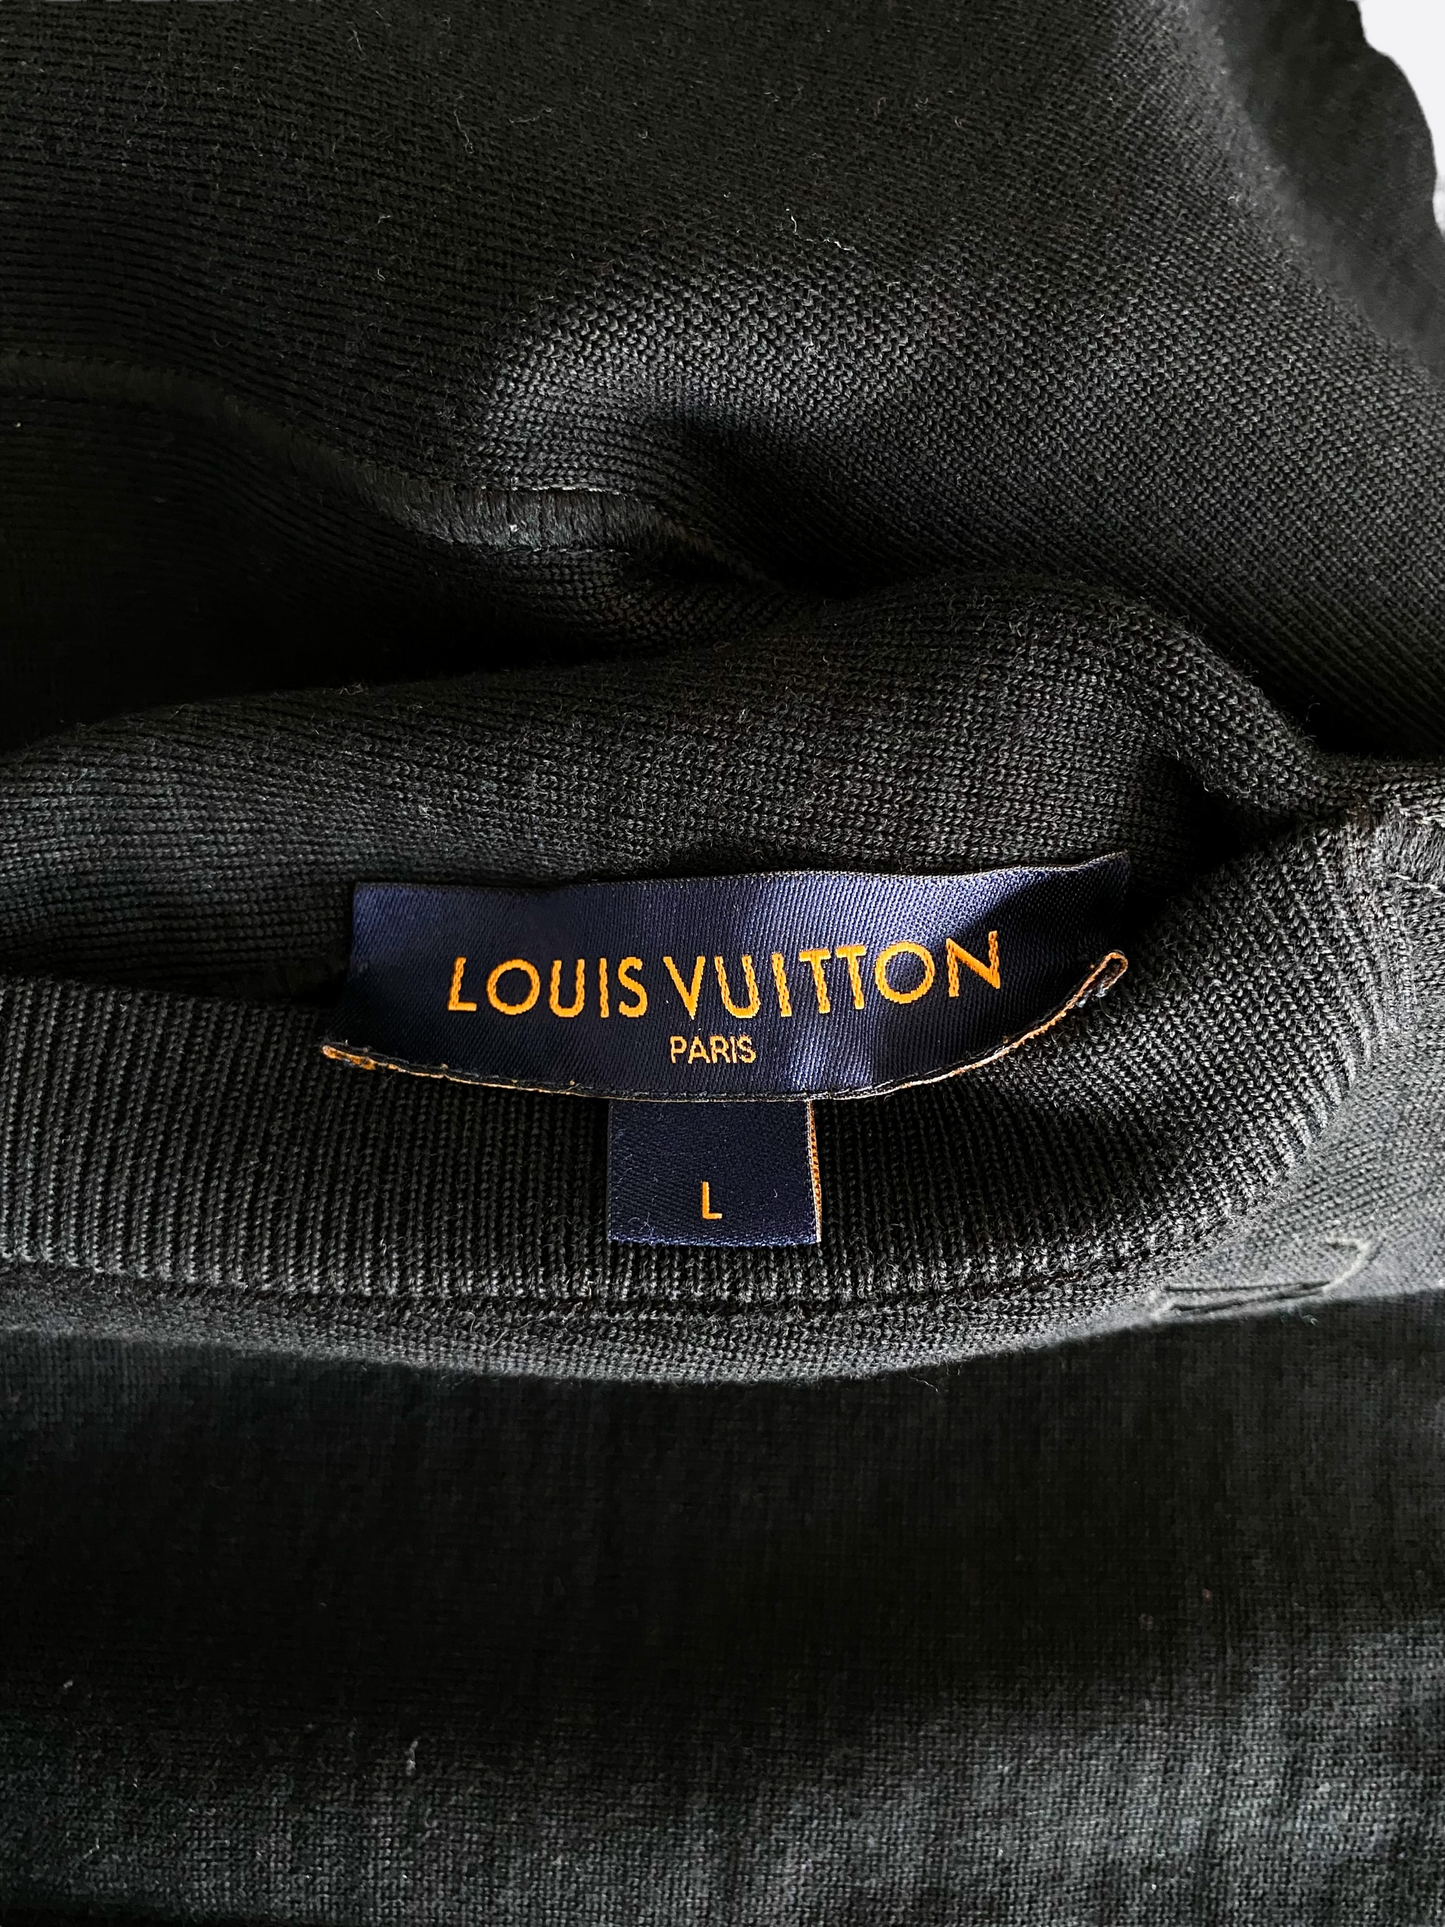 NEW Louis Vuitton Monogram Reversible Light Bomber XL **SOLD OUT